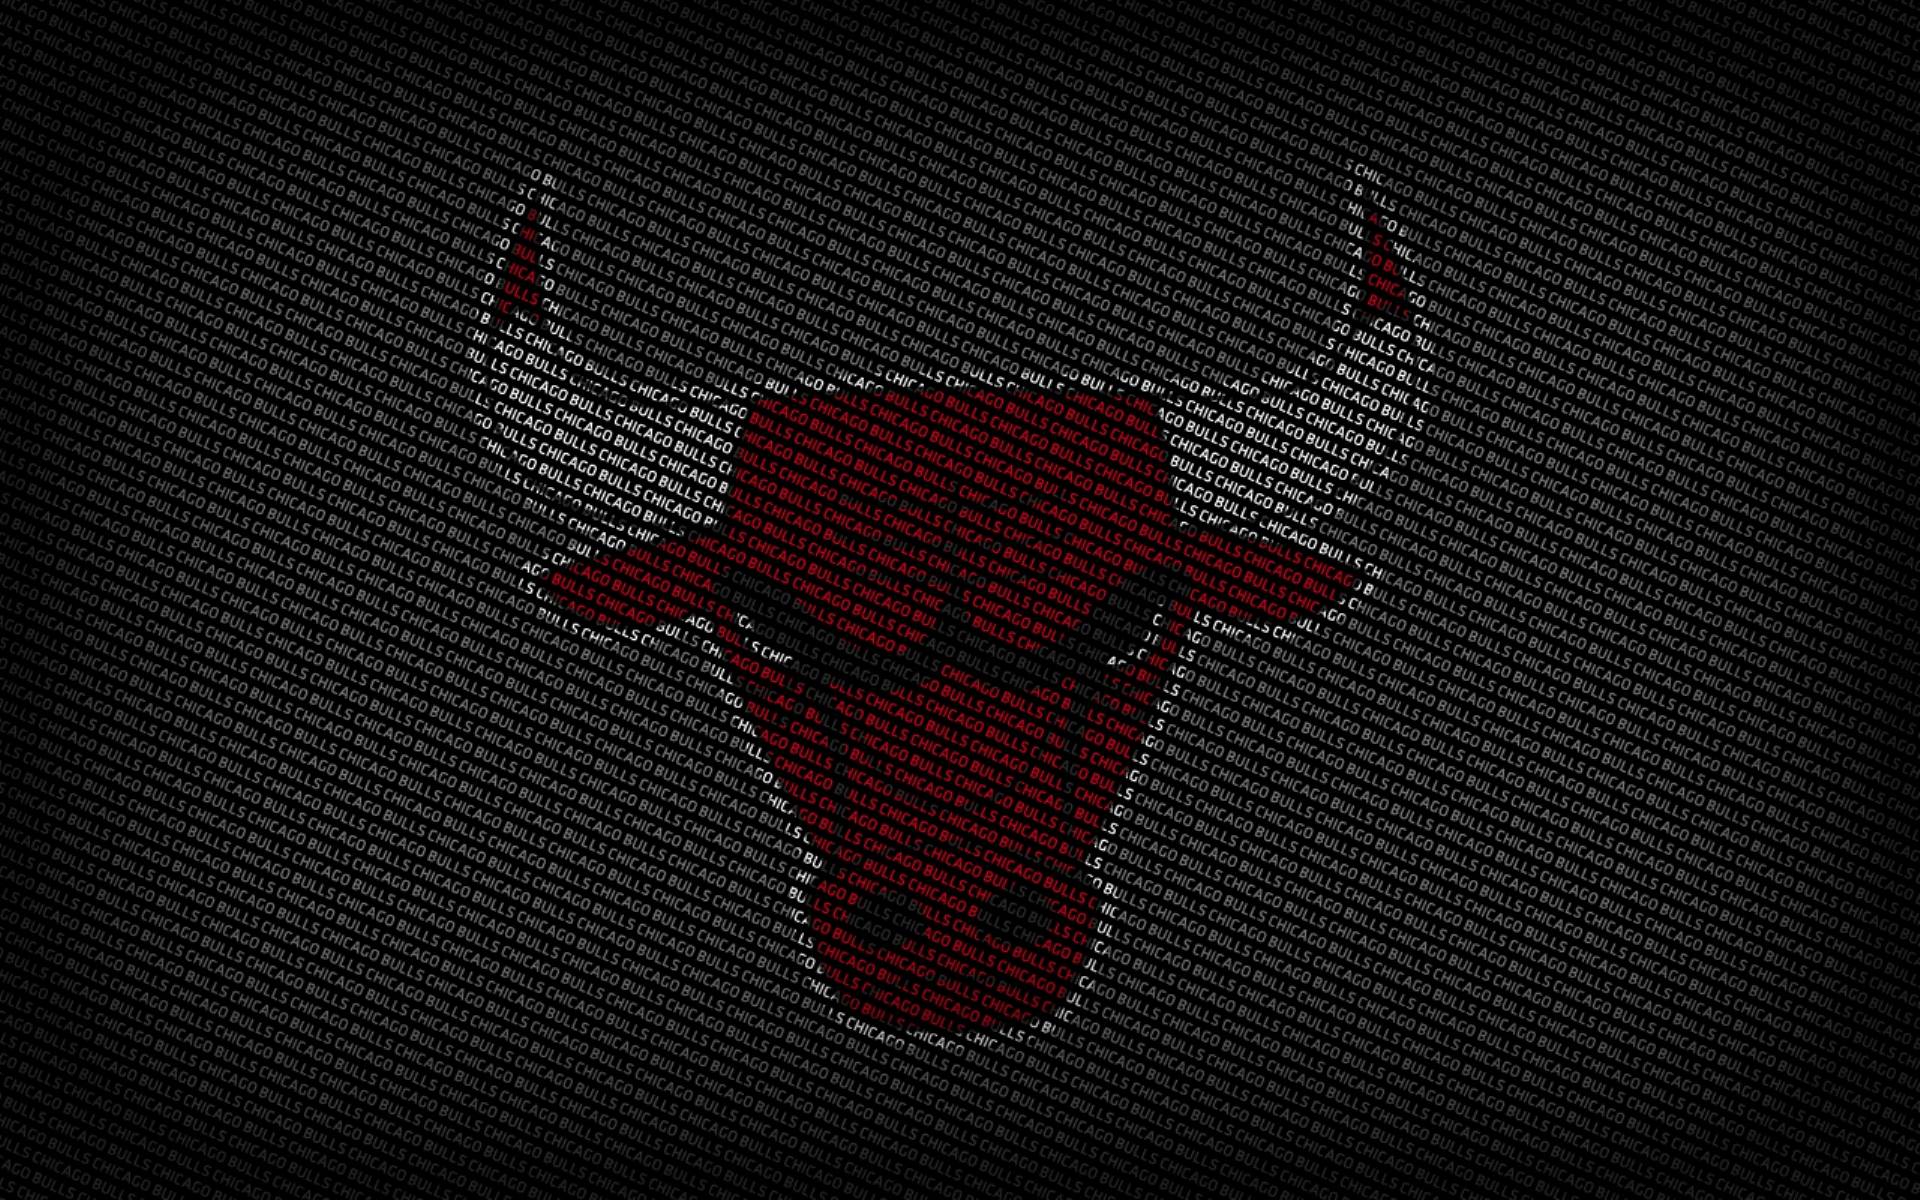 Black and Gold Bull Logo - Chicago Bulls Hd Wallpaper Black And Gold Nba Logo Widescreen Bulls ...